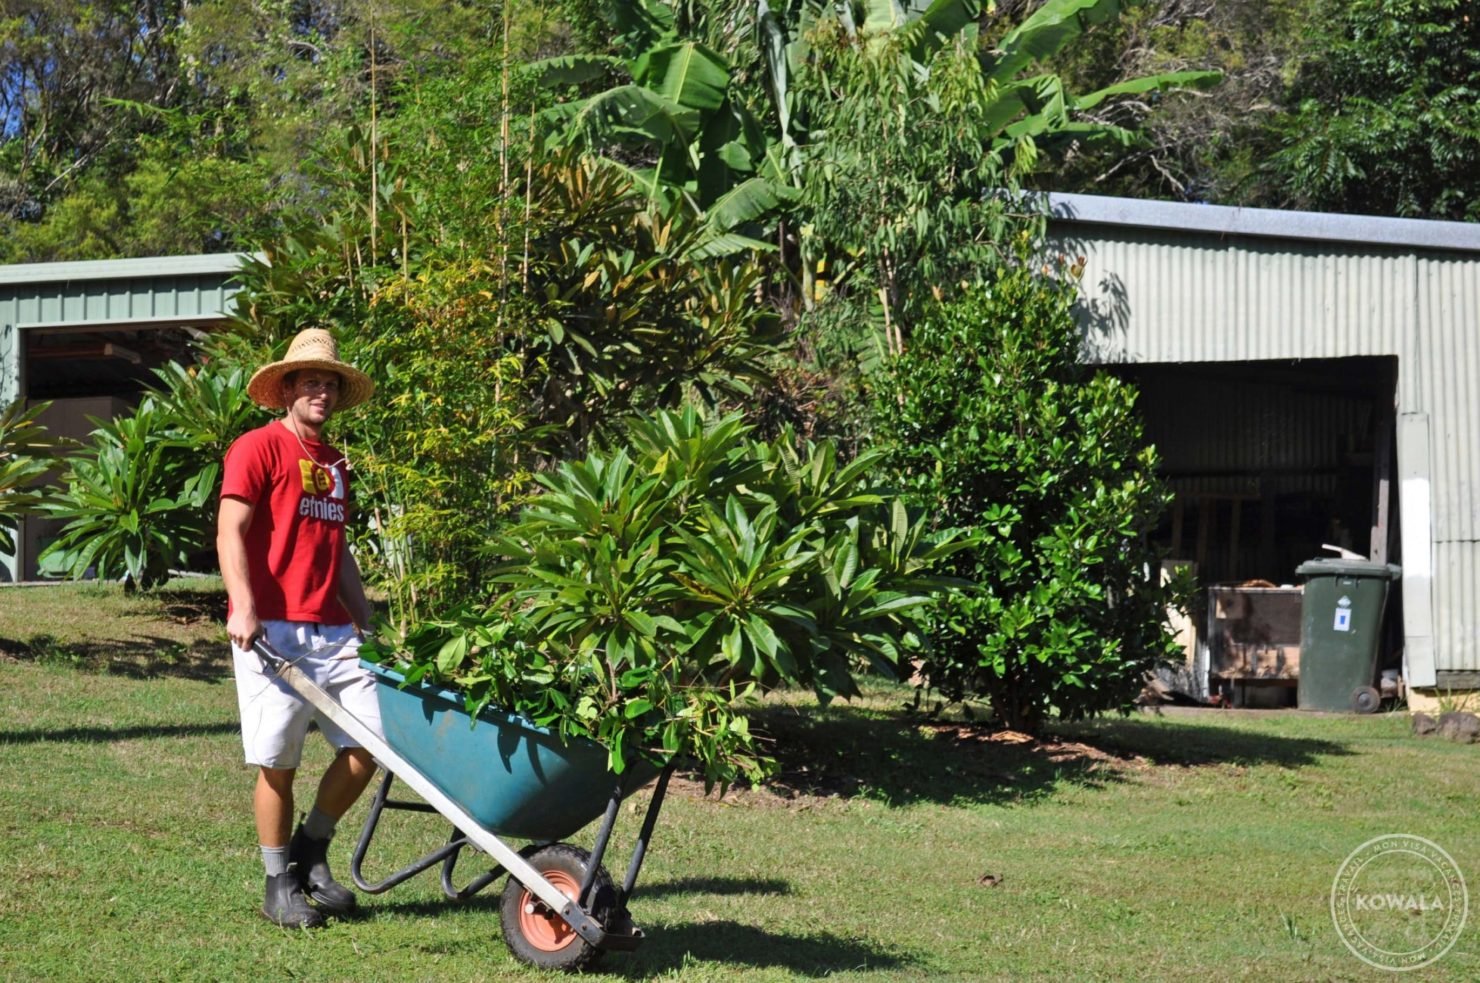 jardinage à Larnook - helpx wwoofing australie - kowala.fr